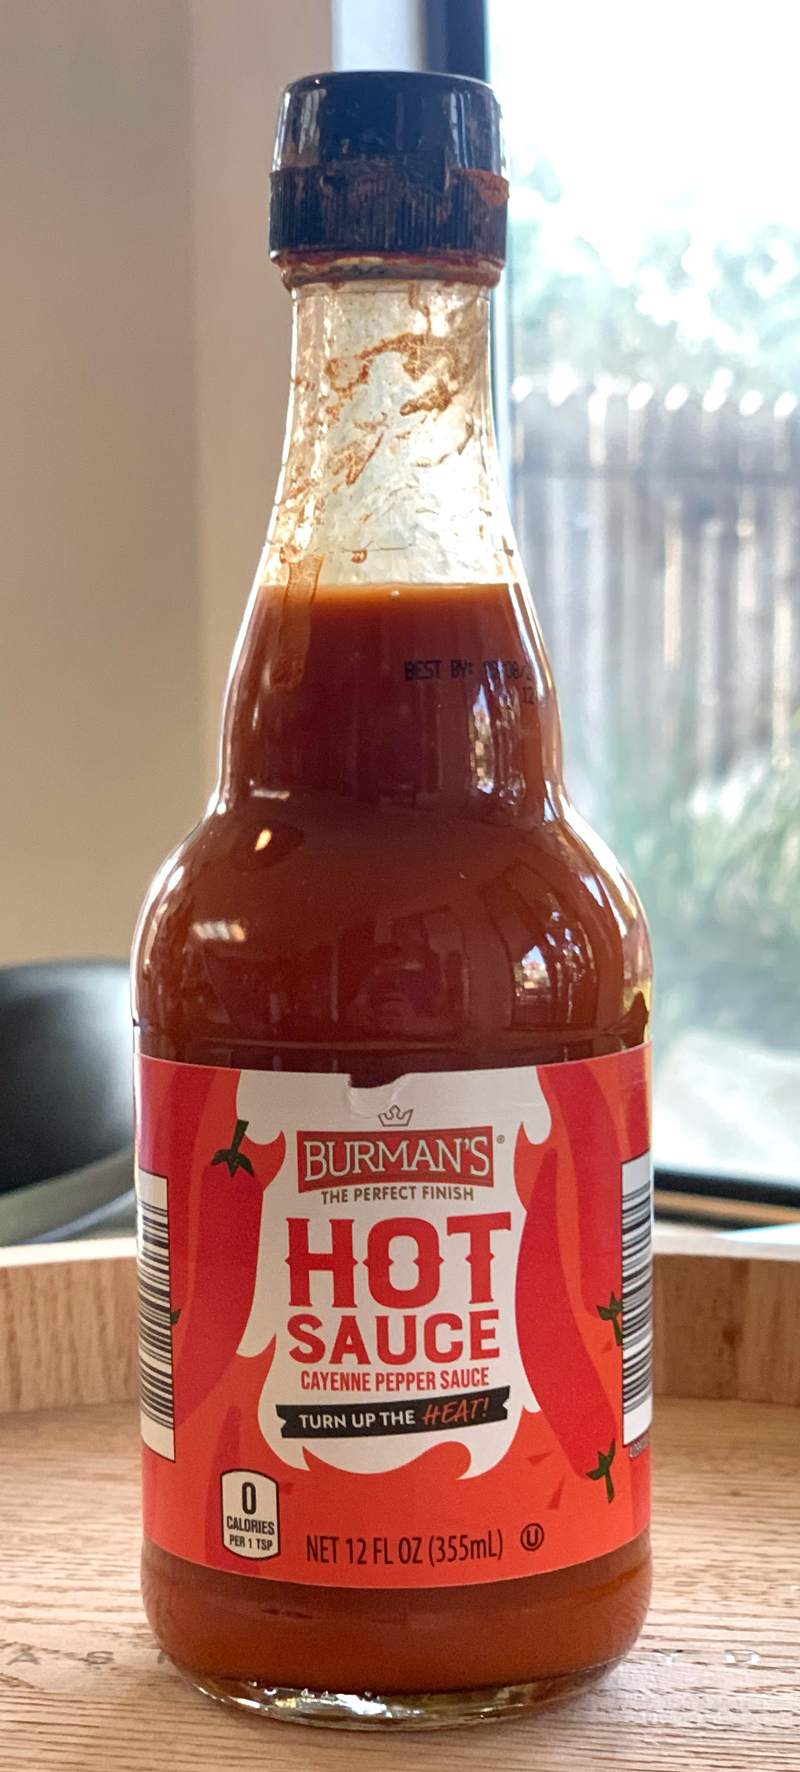 Burman's Hot sauce